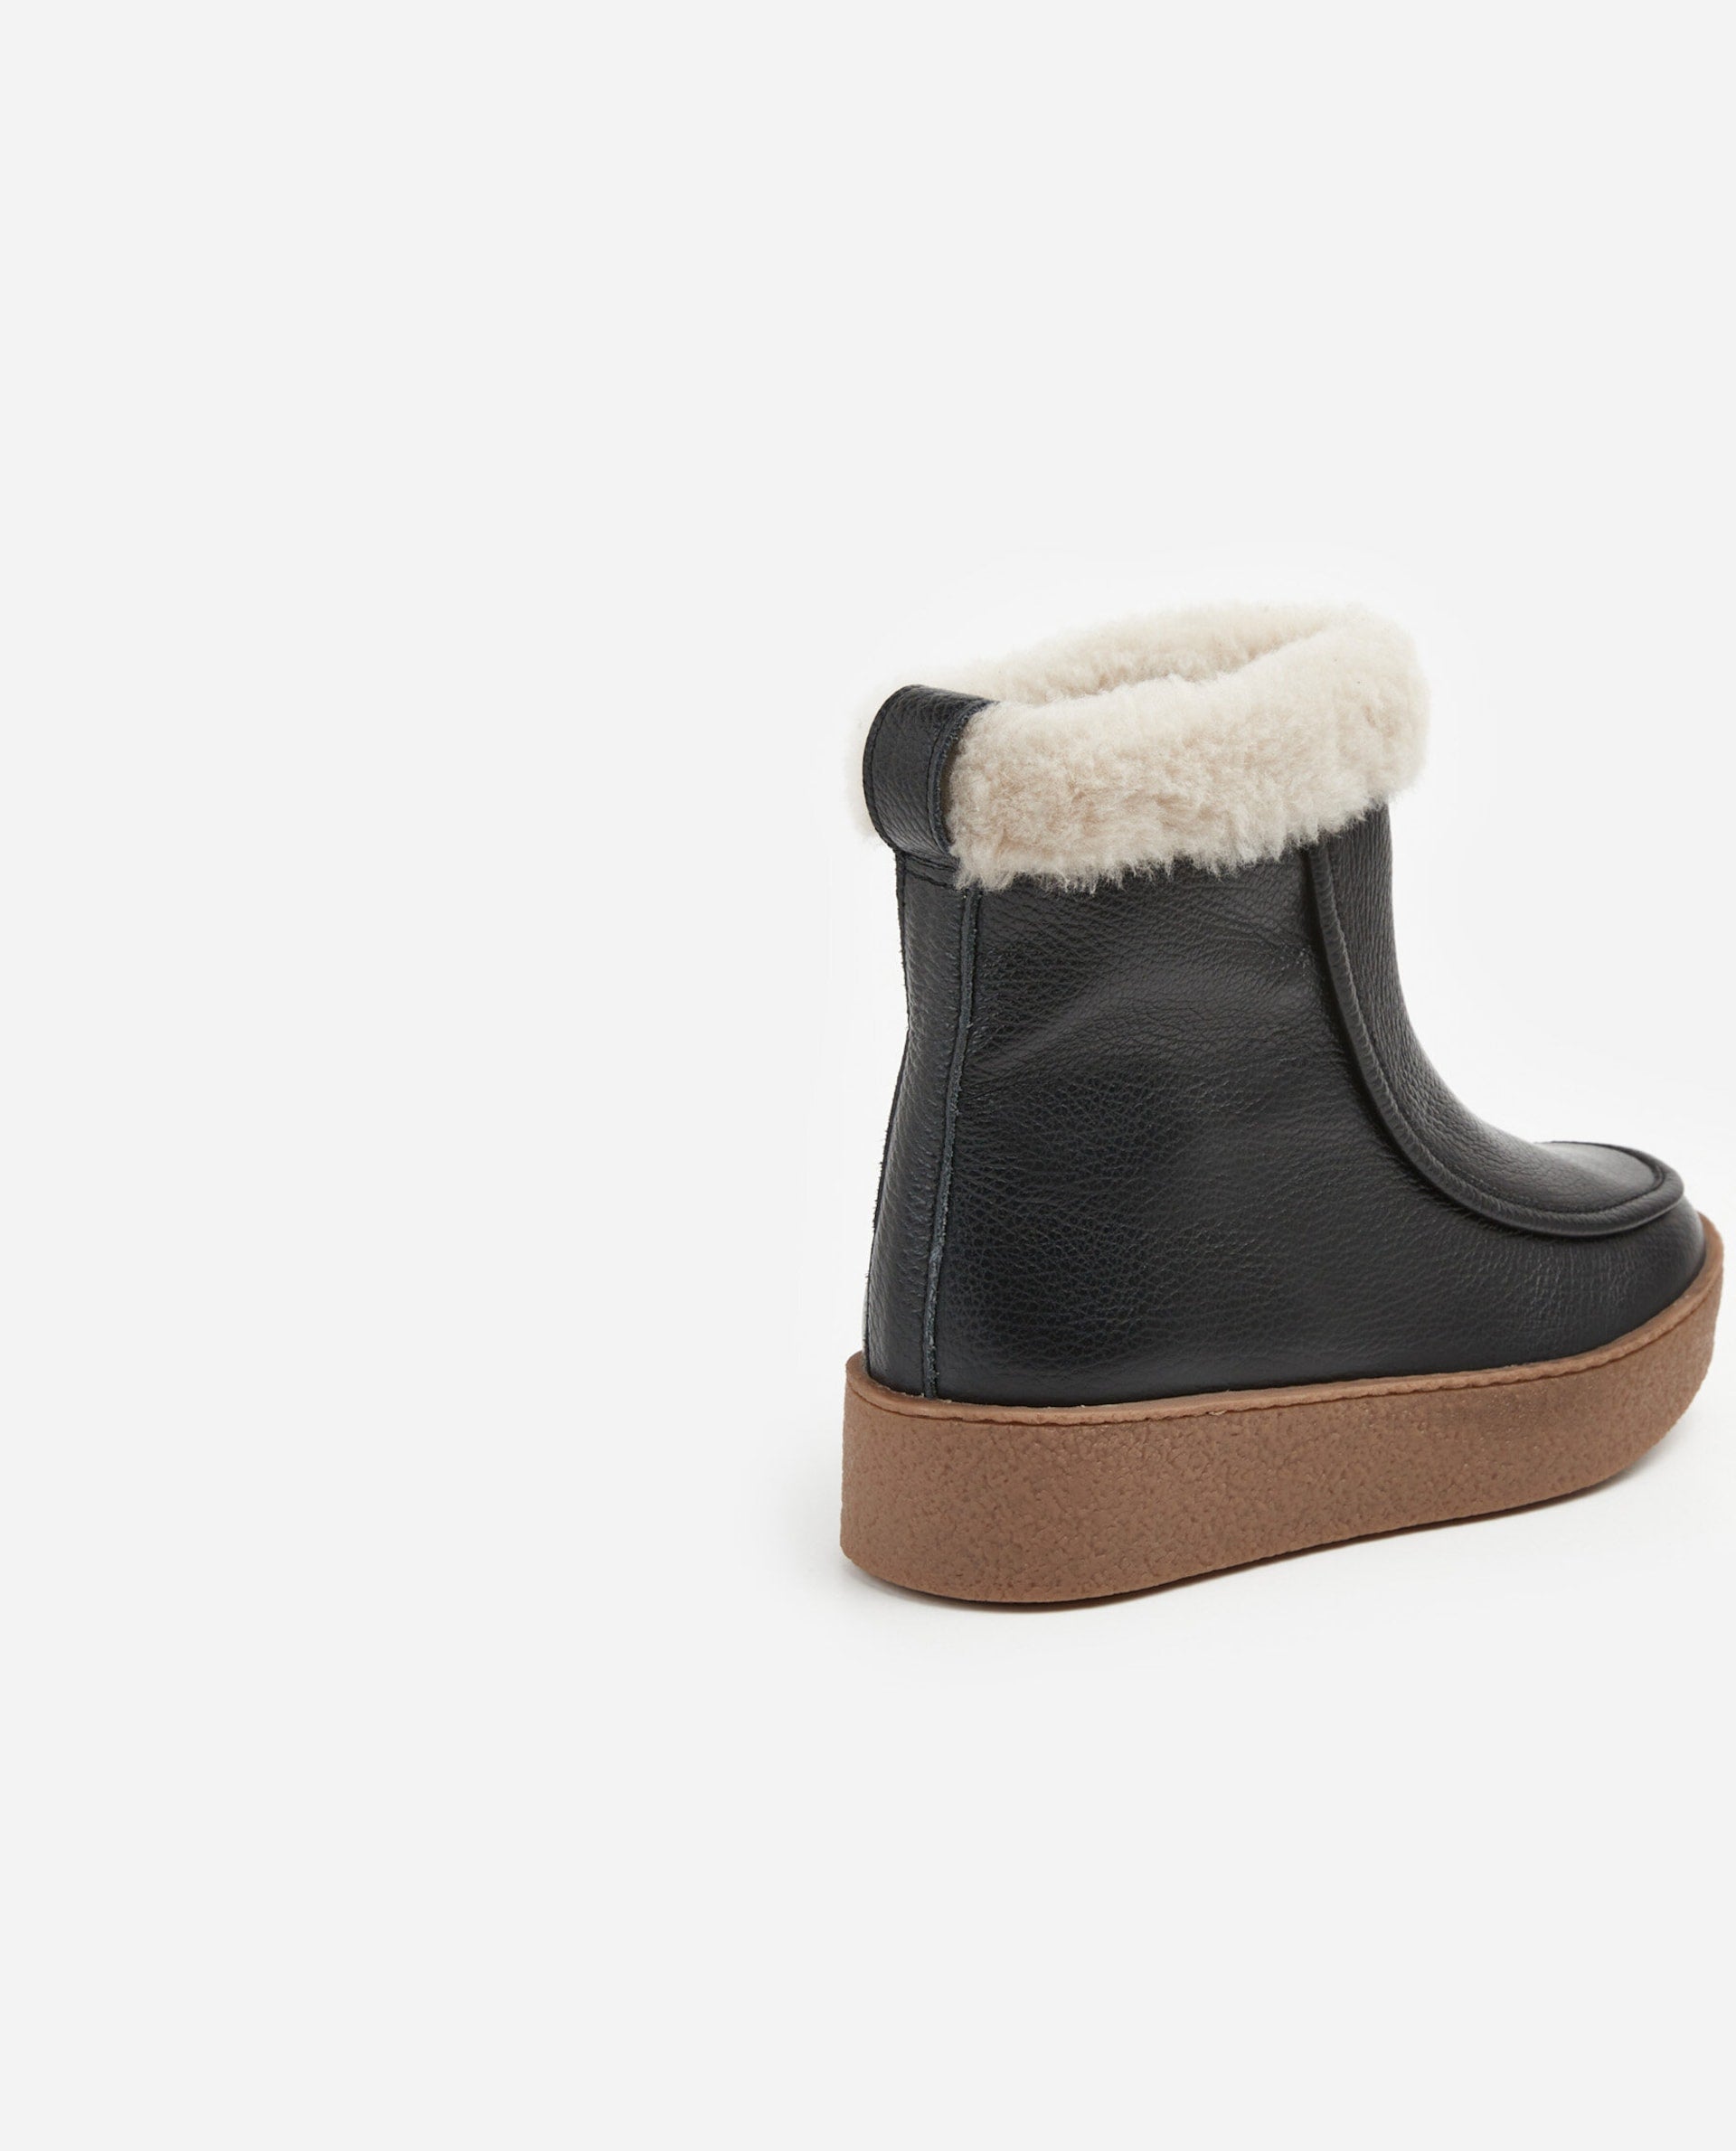 Simone Black Leather Winter Boots 22020923601-001 -3